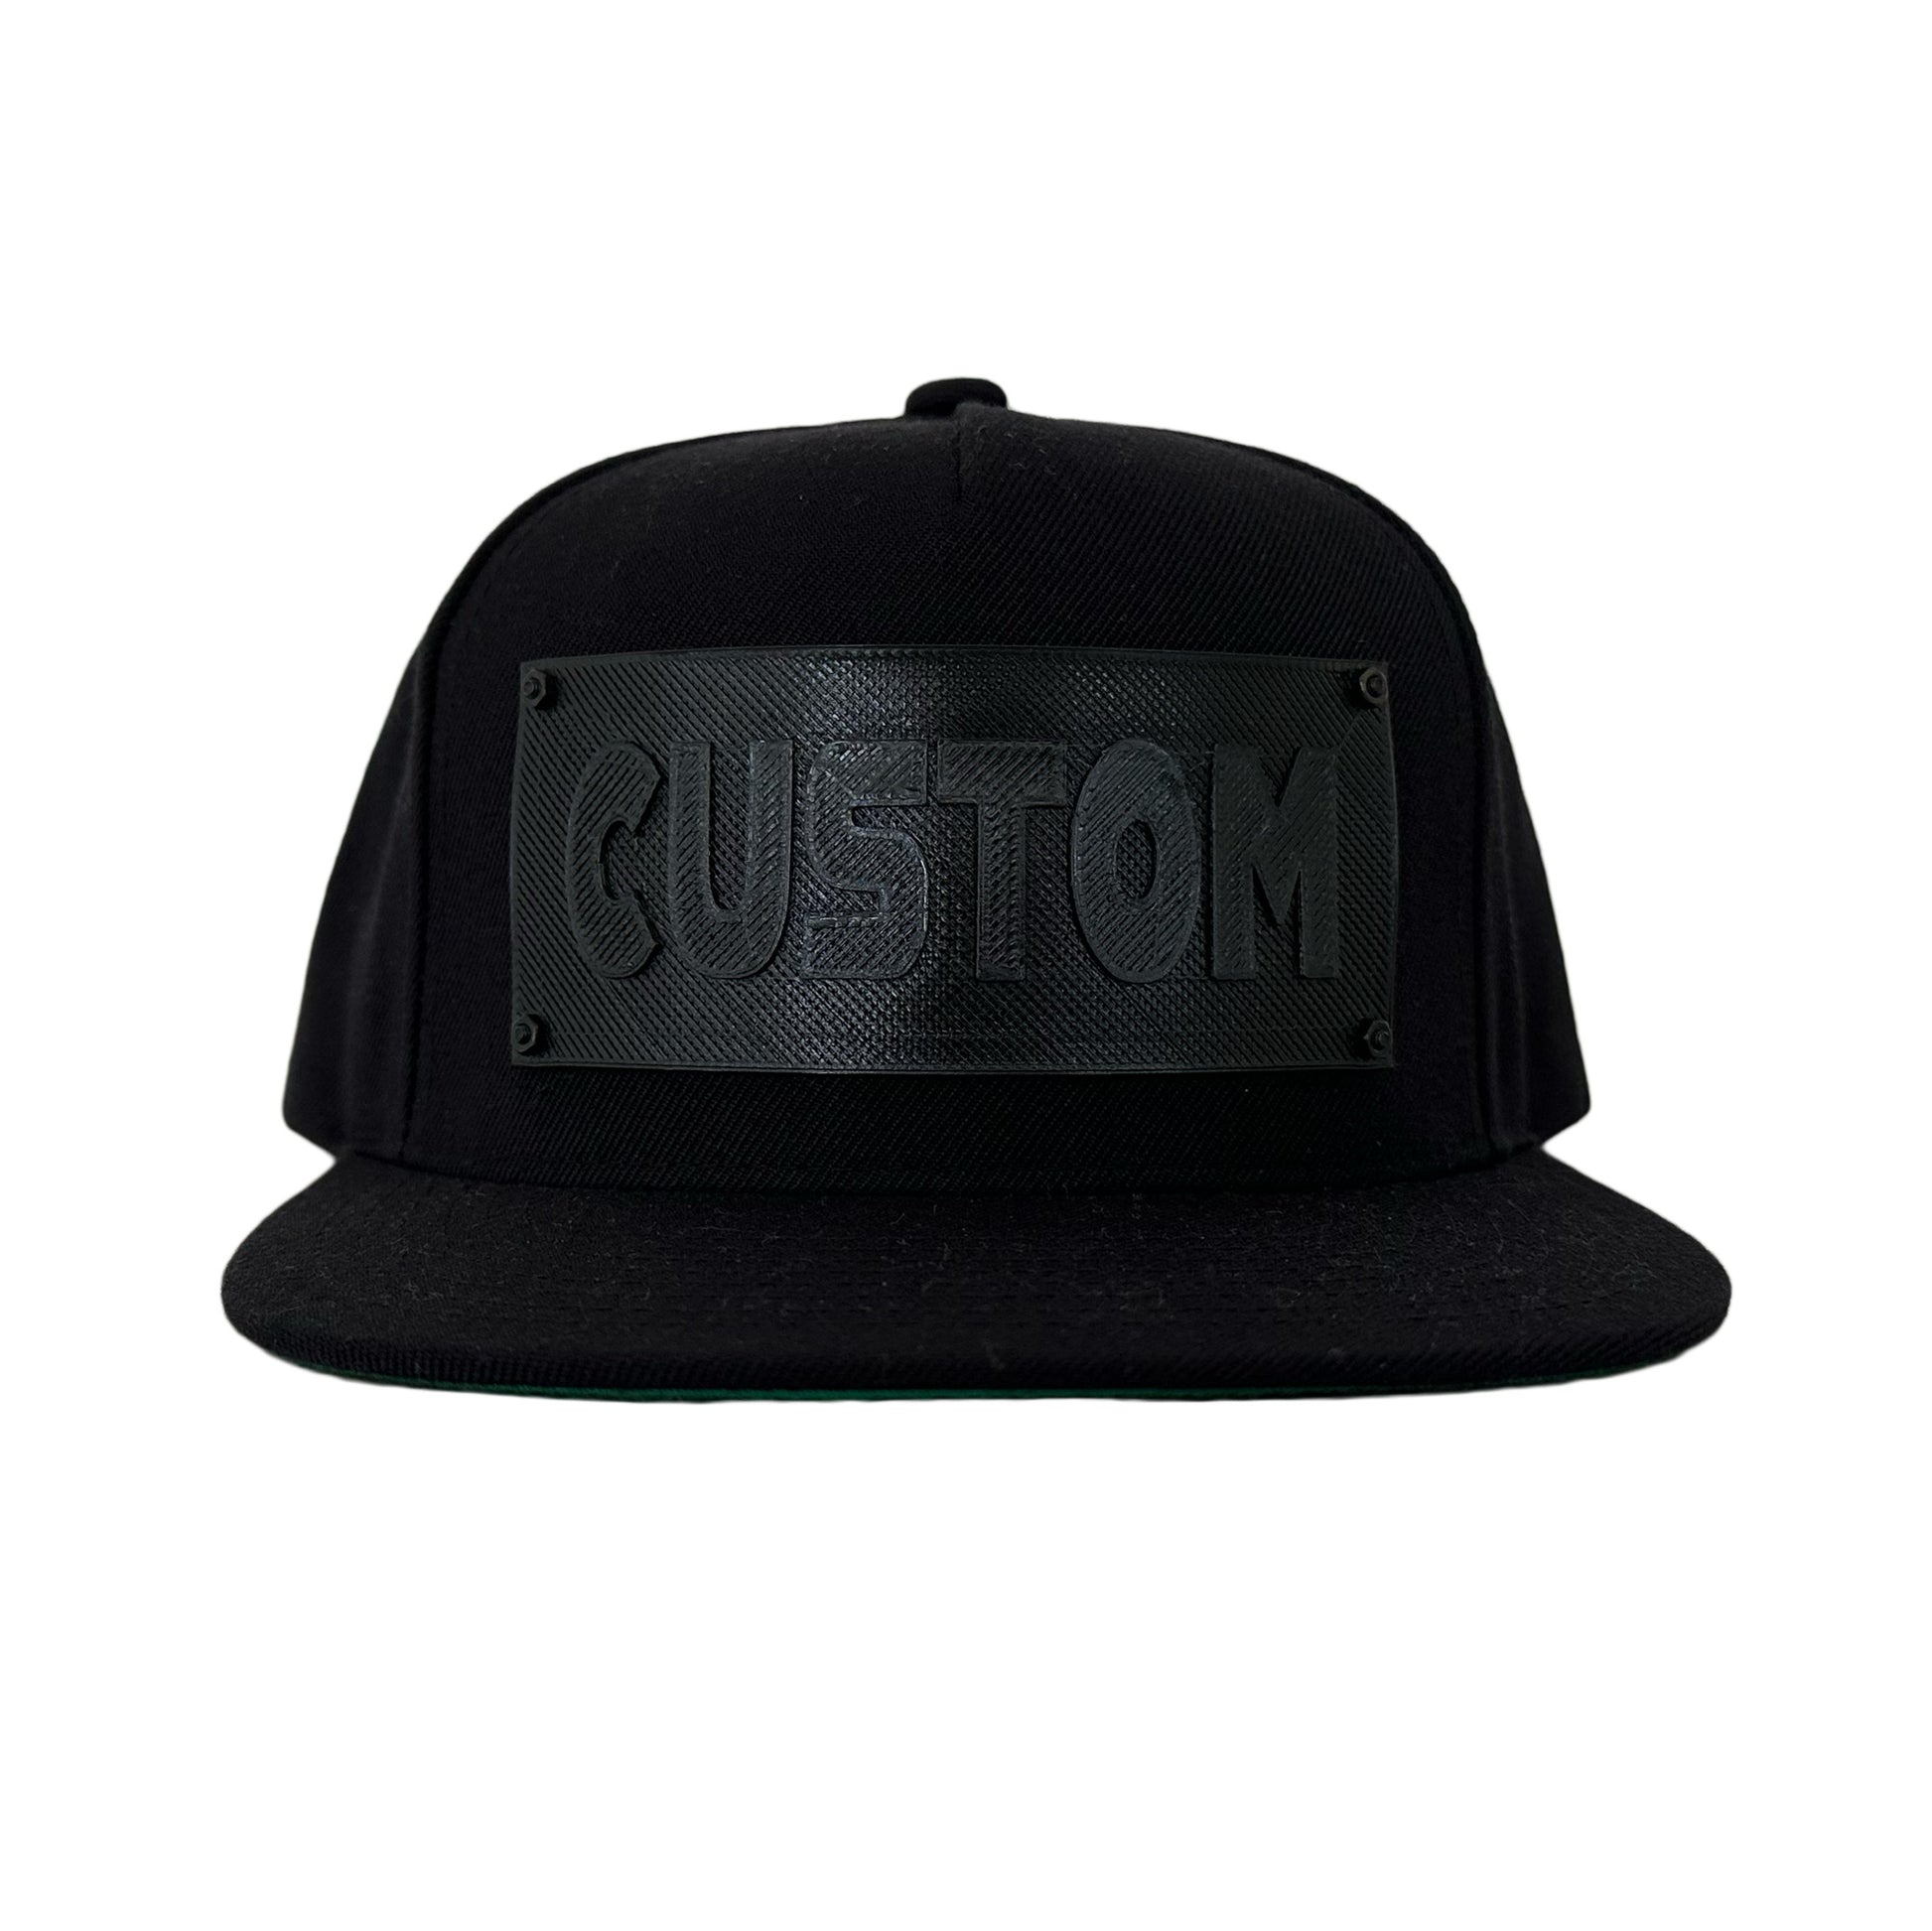 A black snapback baseball hat with a black logo panel that says"CUSTOM".